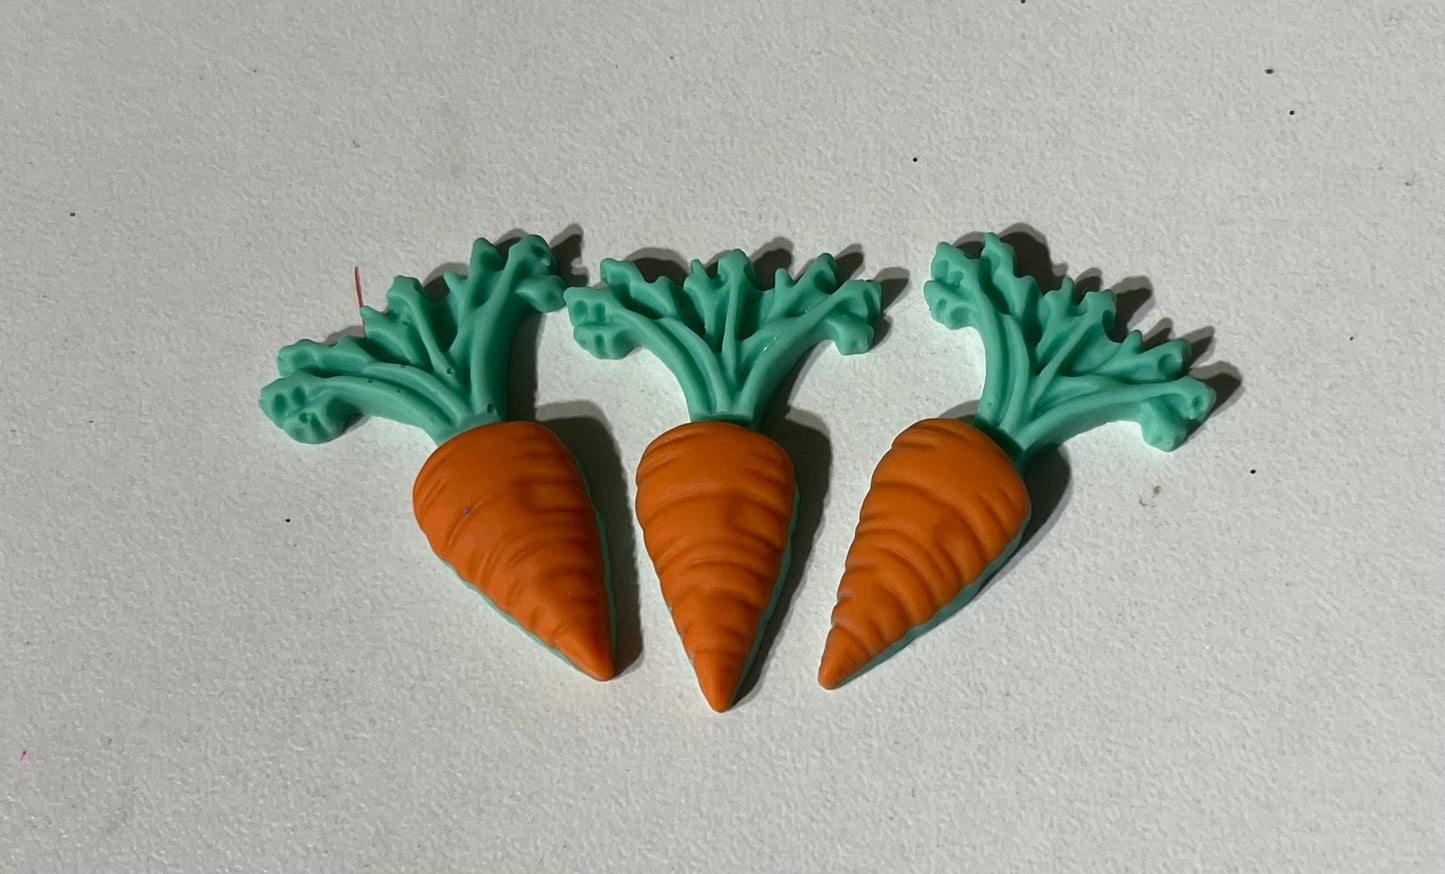 (3) Skinny carrots